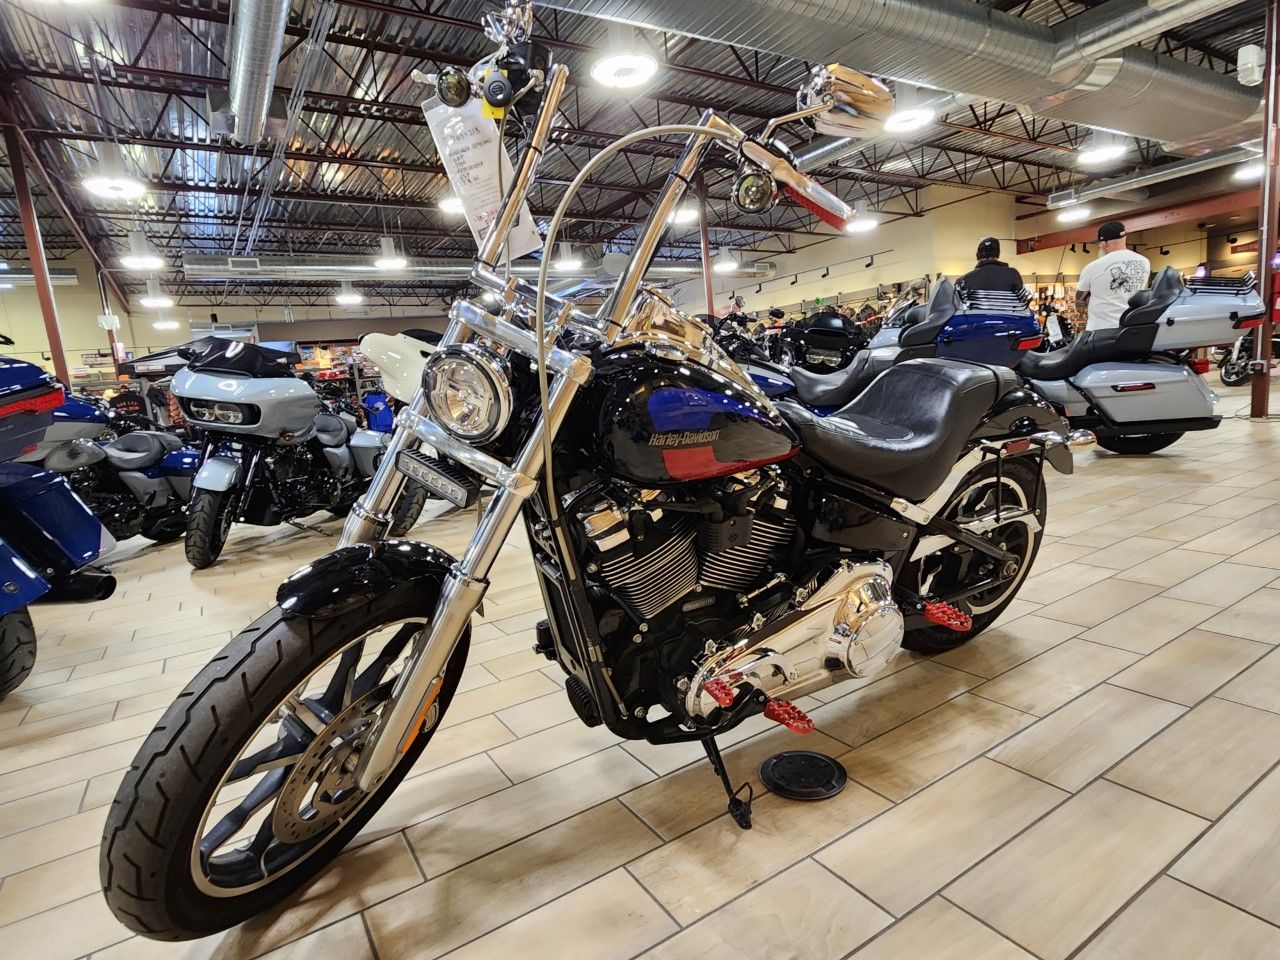 2019 Harley-Davidson Low Rider® in Riverdale, Utah - Photo 5